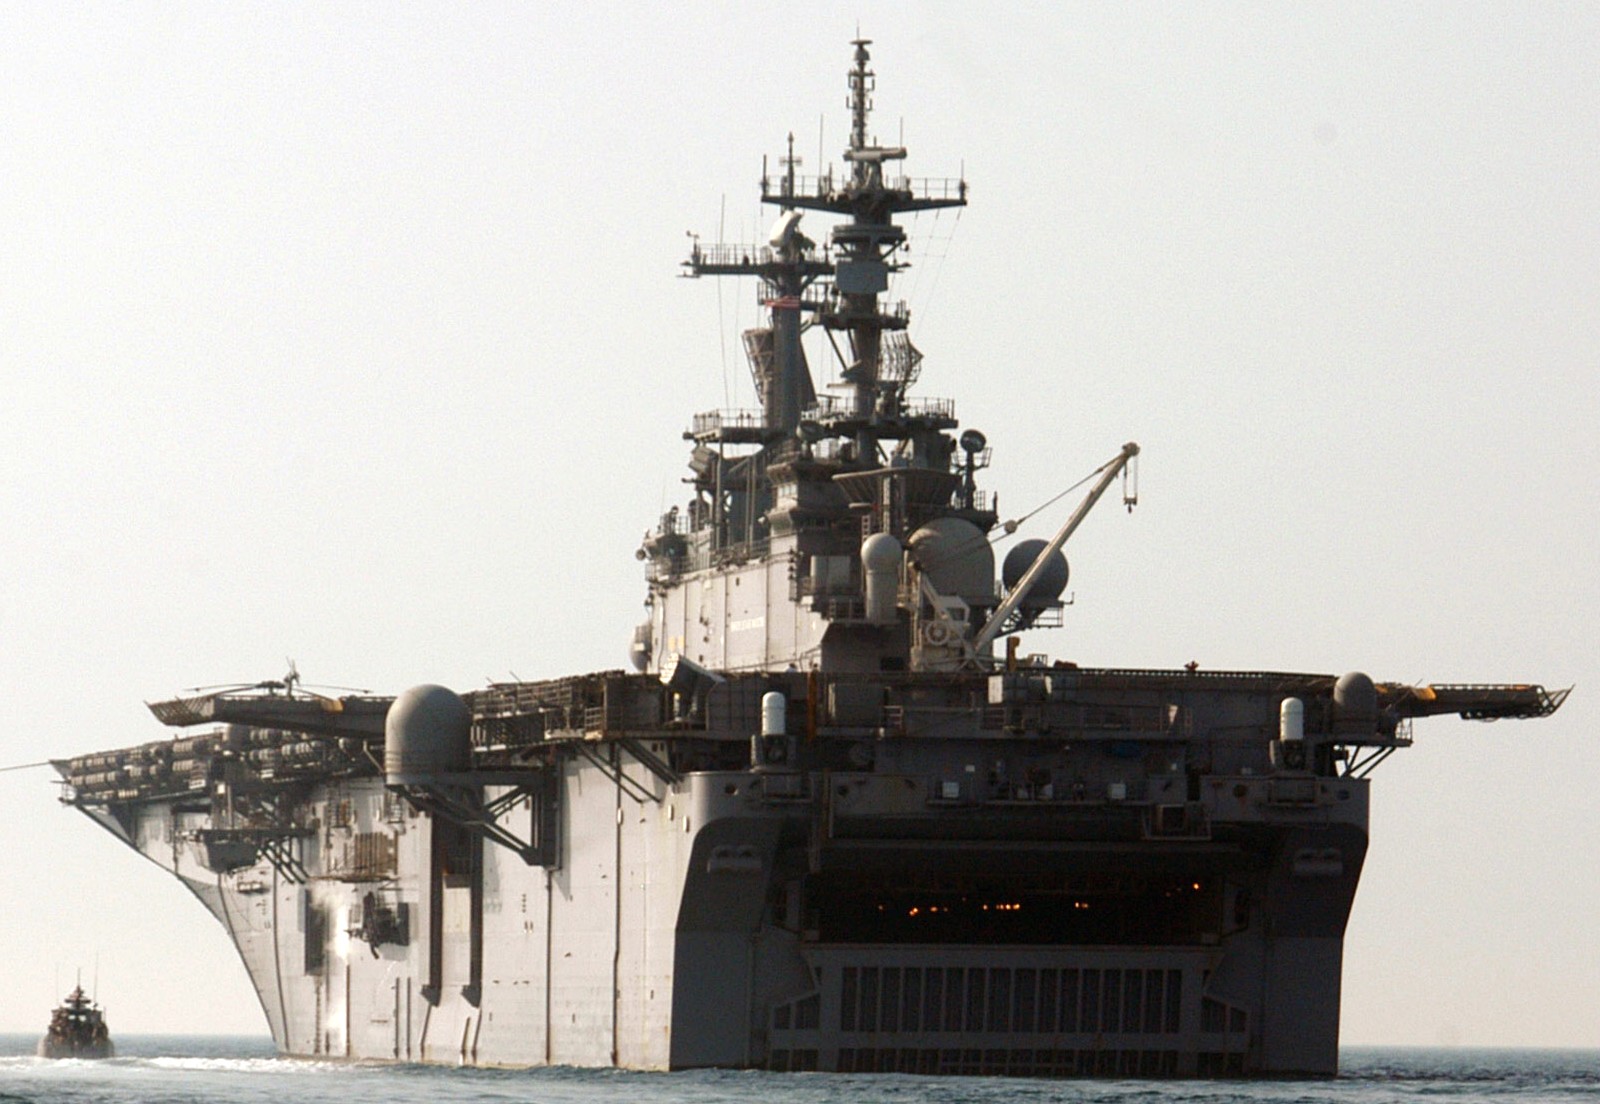 lhd-3 uss kearsarge wasp class amphibious assault ship us navy marines persian gulf 46